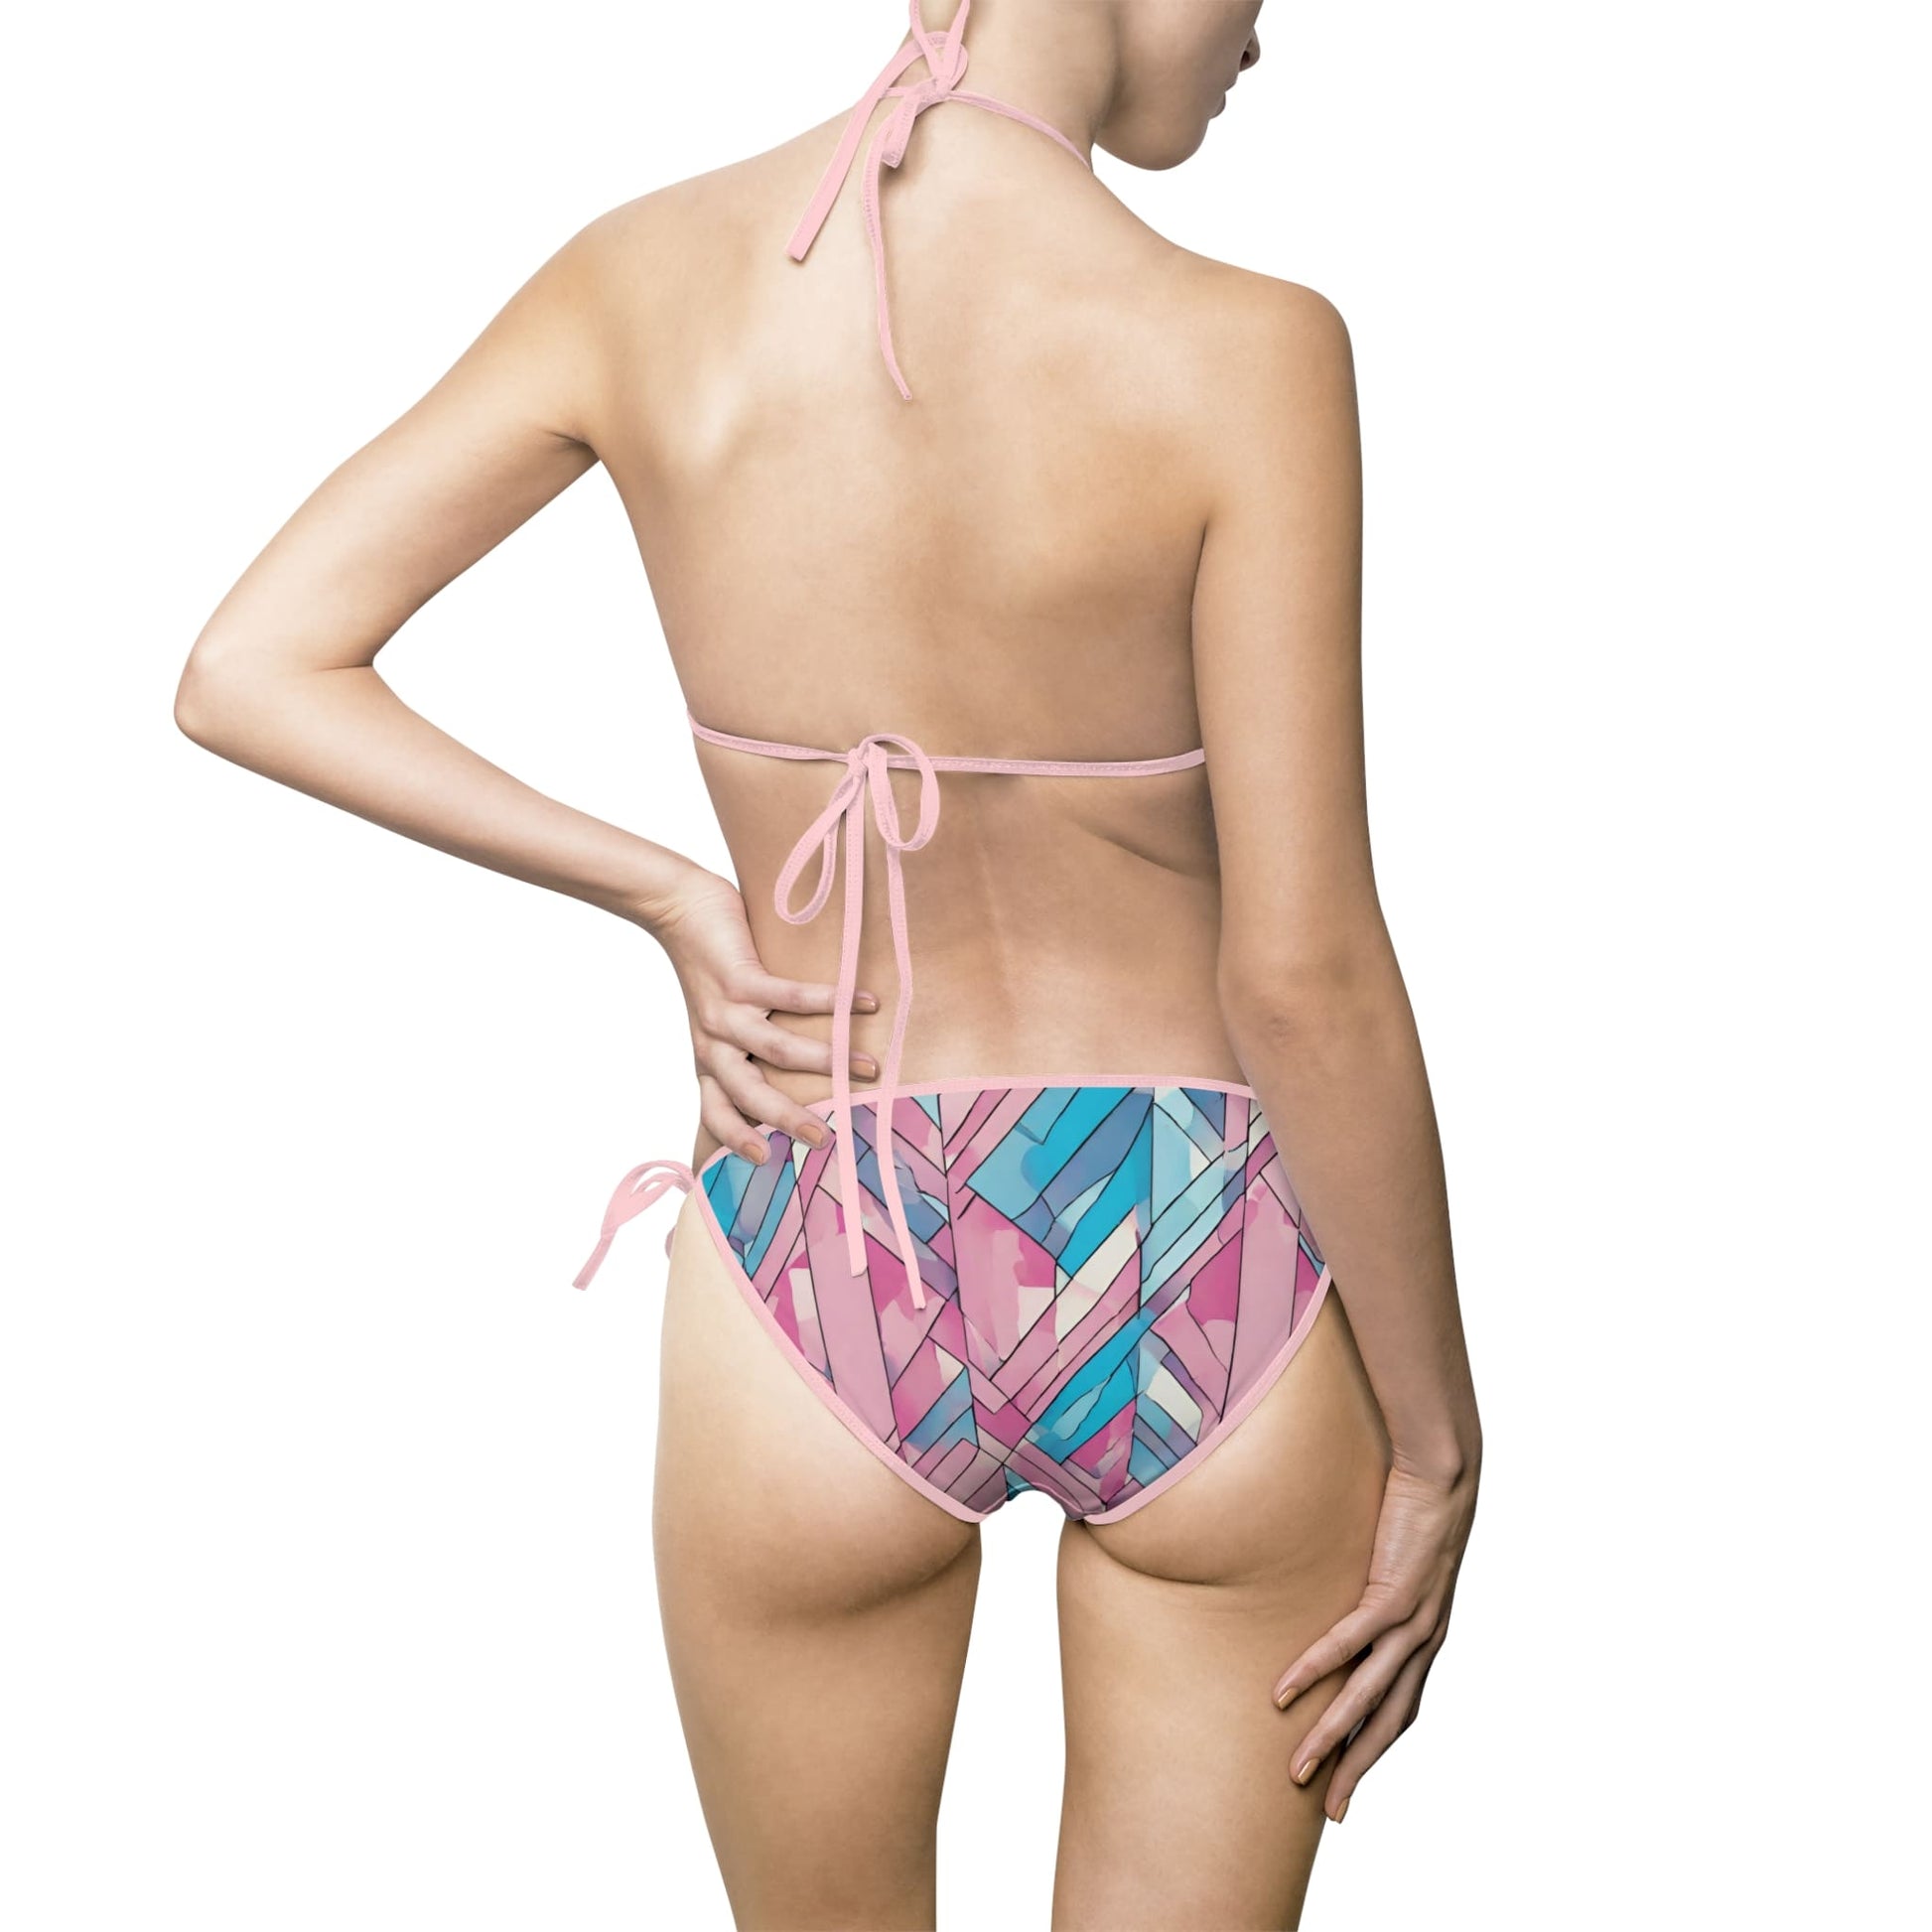 femboy bikini set, abstract femboi flag colors, back